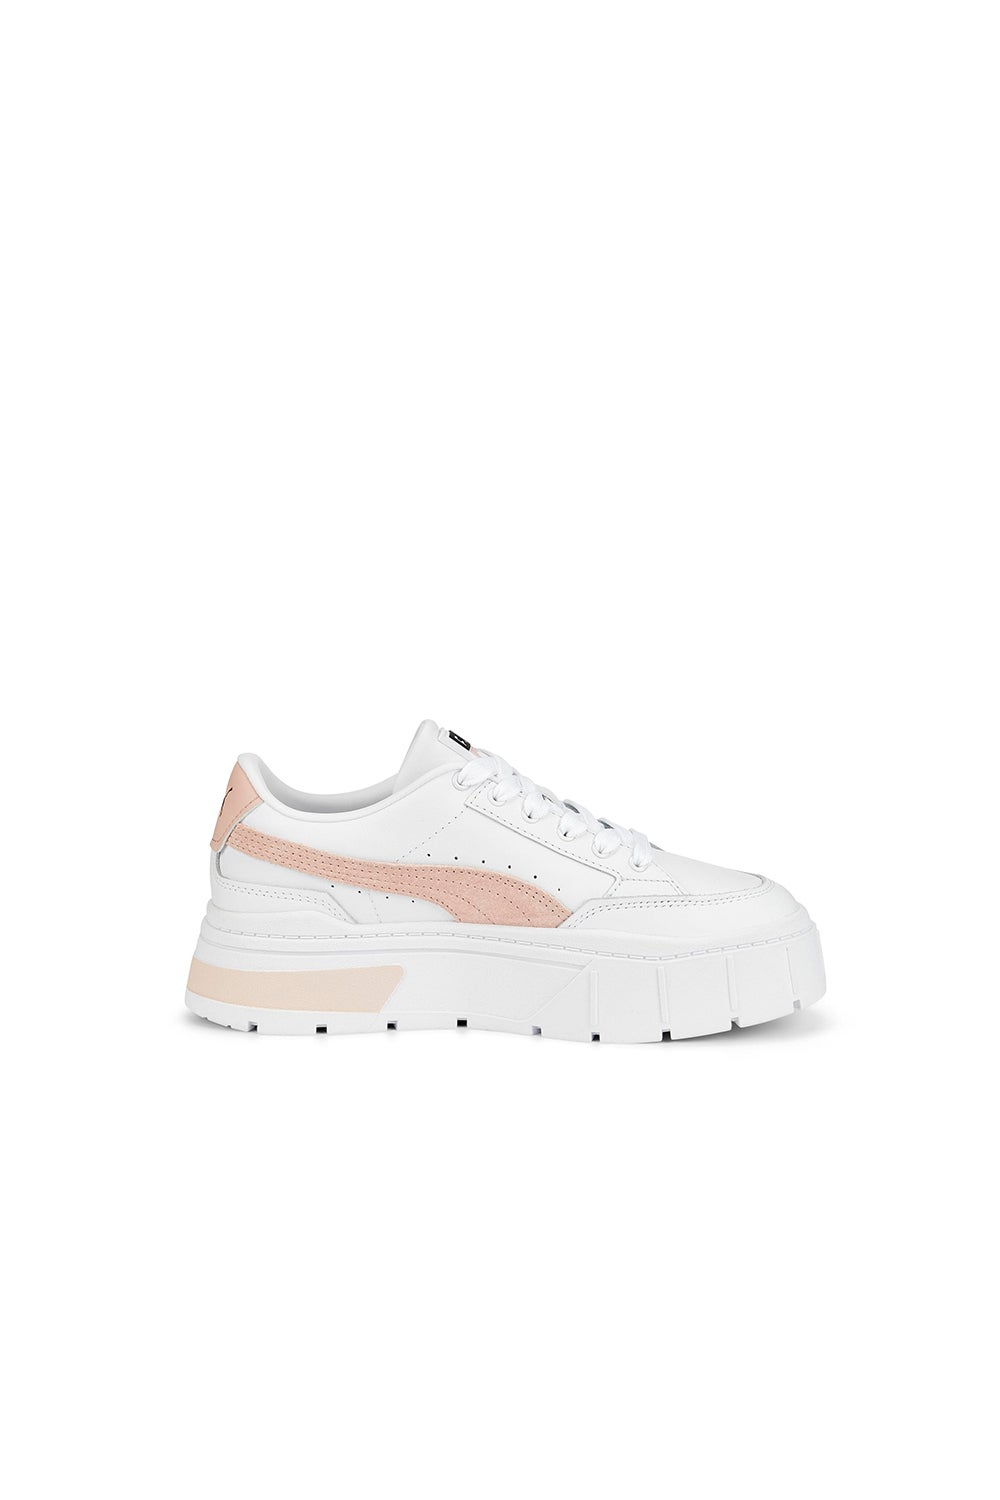 Puma Mayze Stack Sneakers White/Rose Quartz